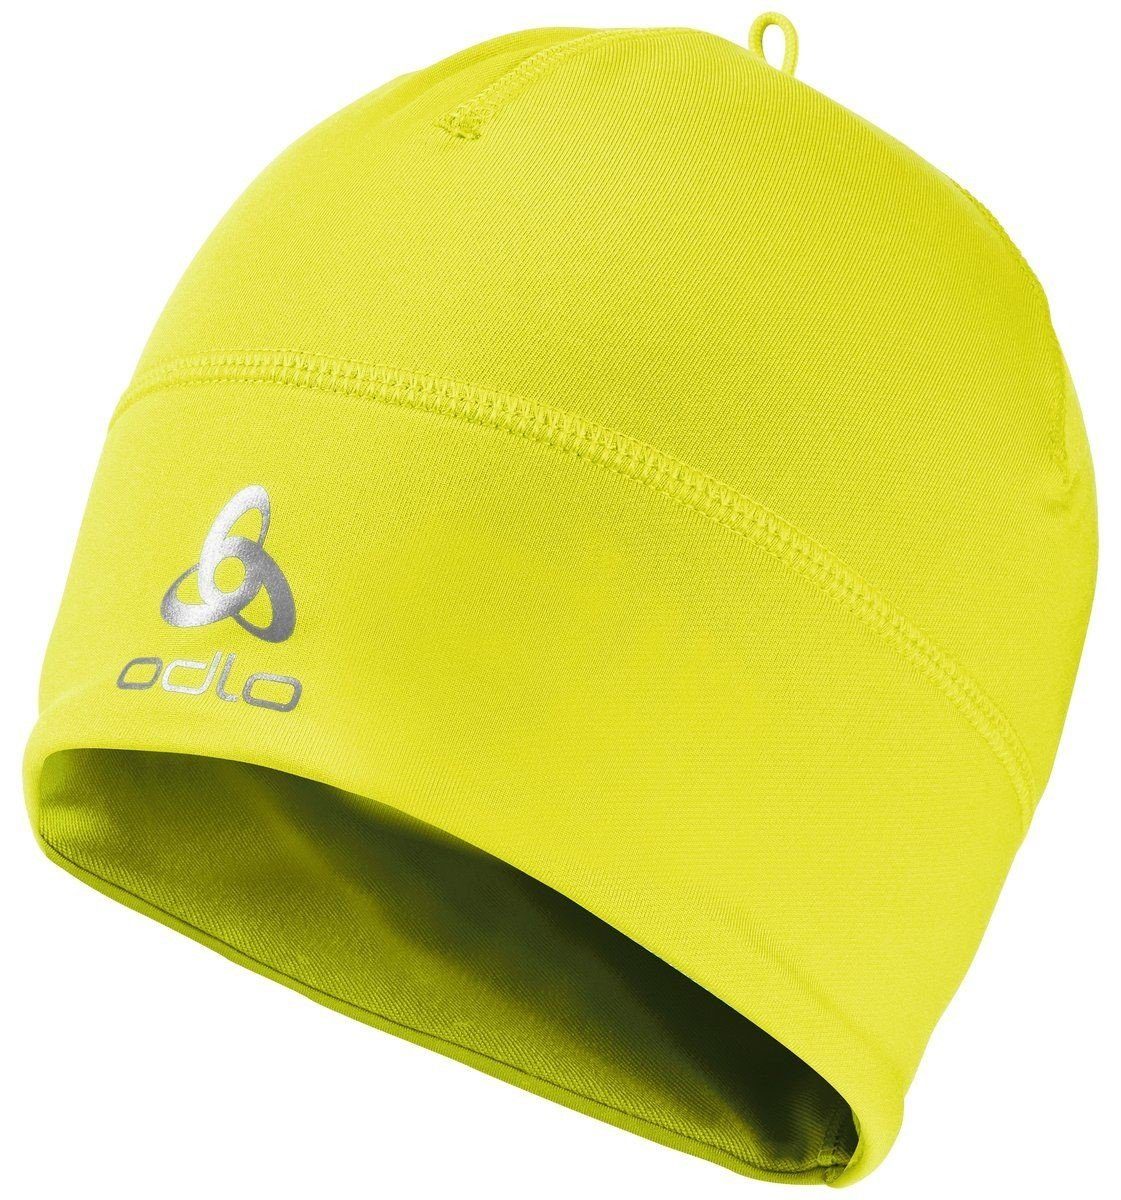 Odlo 50016 POLYKNIT yellow Hat WARM Cap ECO safety Baseball